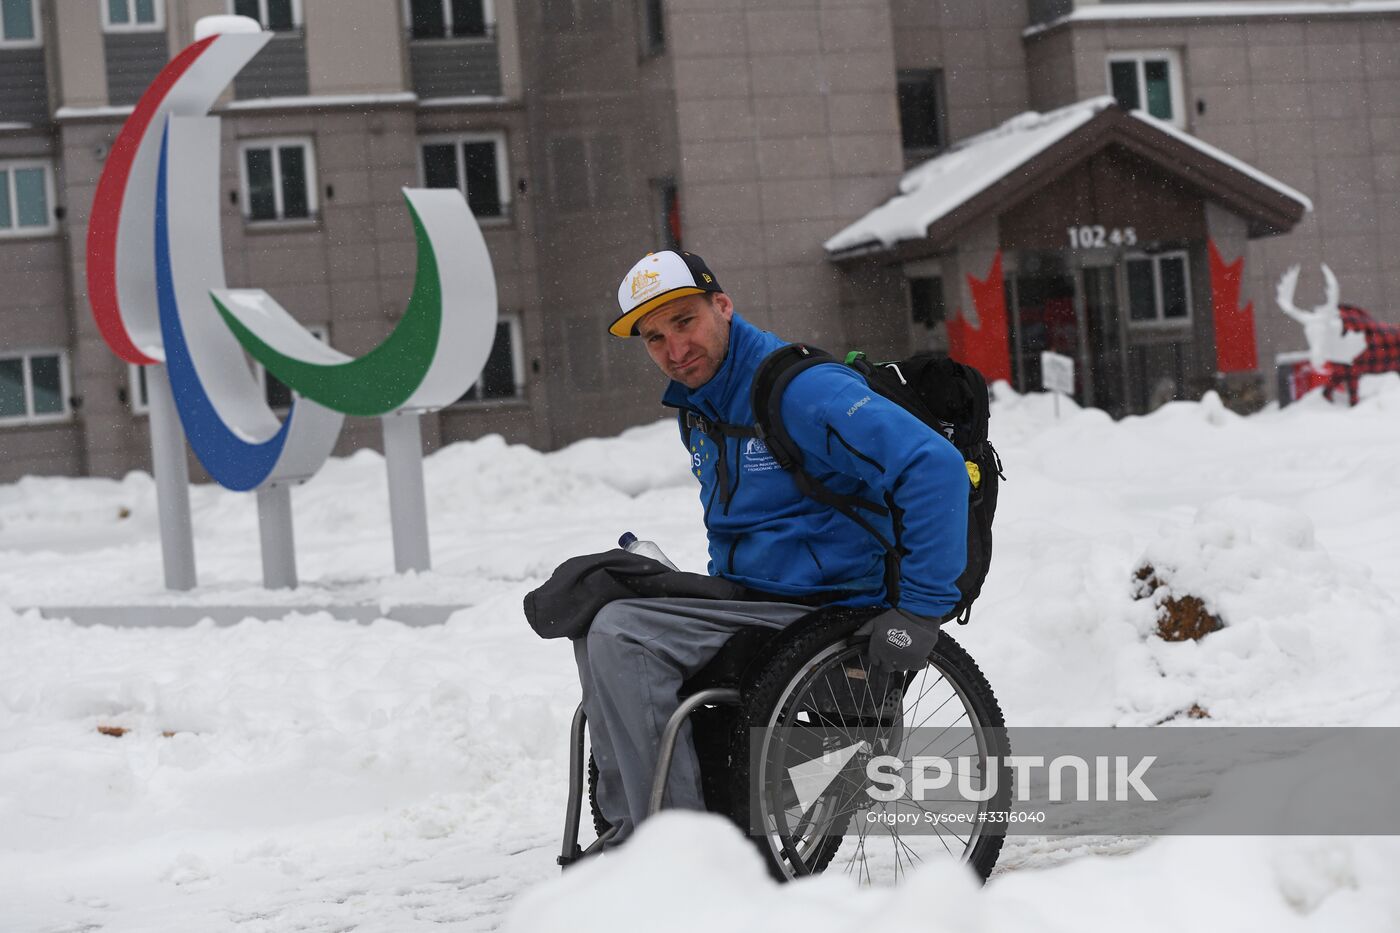 Paralympic Village in Pyeongchang